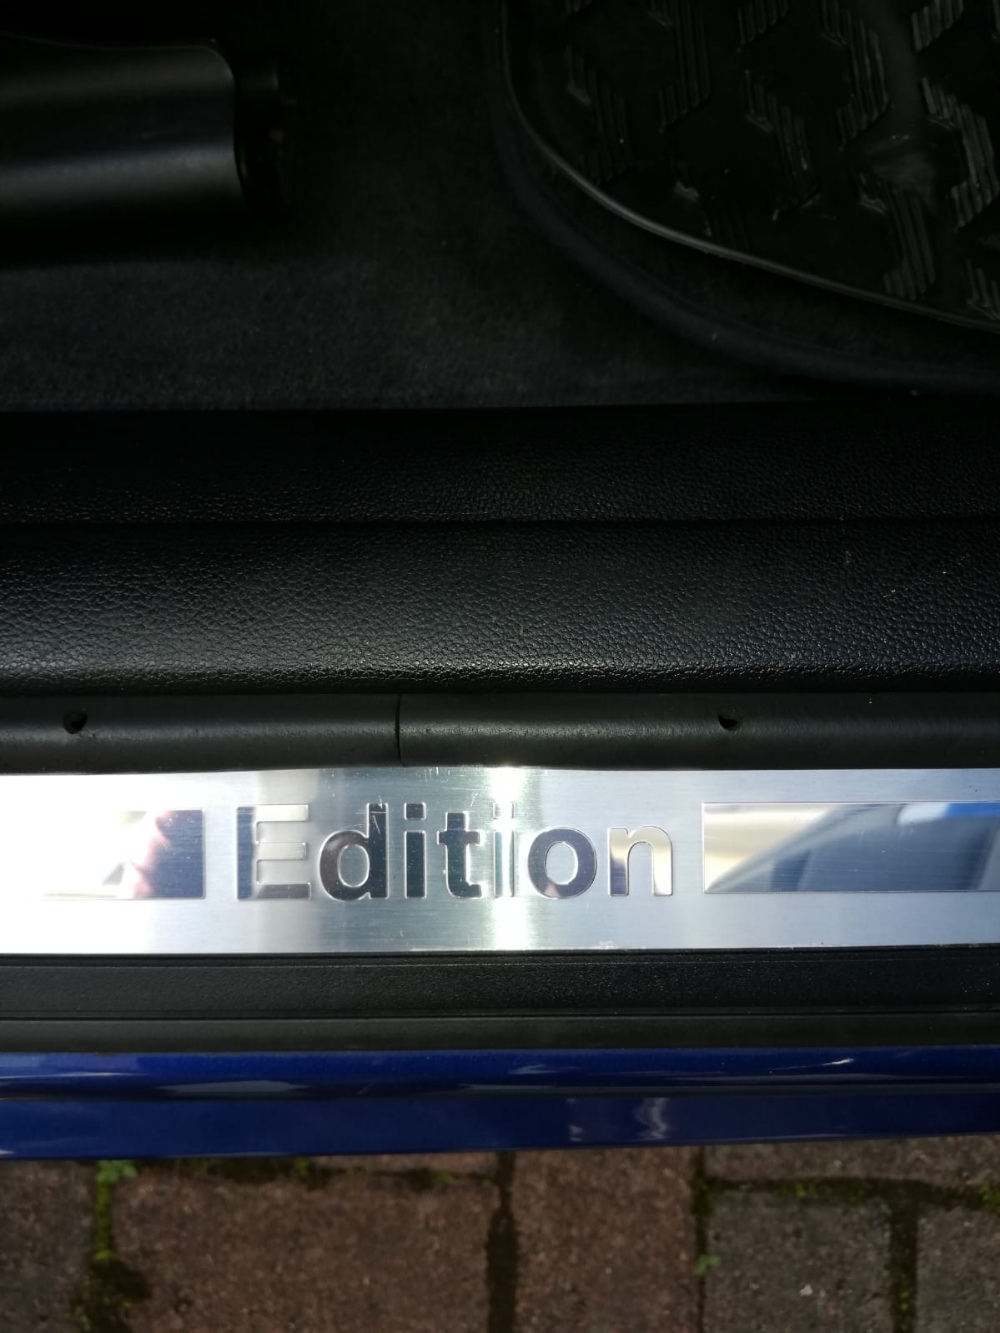 BMW 320 SALOON, Blue, Registration Number CX61 XEJ, Nov 2011 registered, untaxed, MOT to 11 - Image 15 of 15